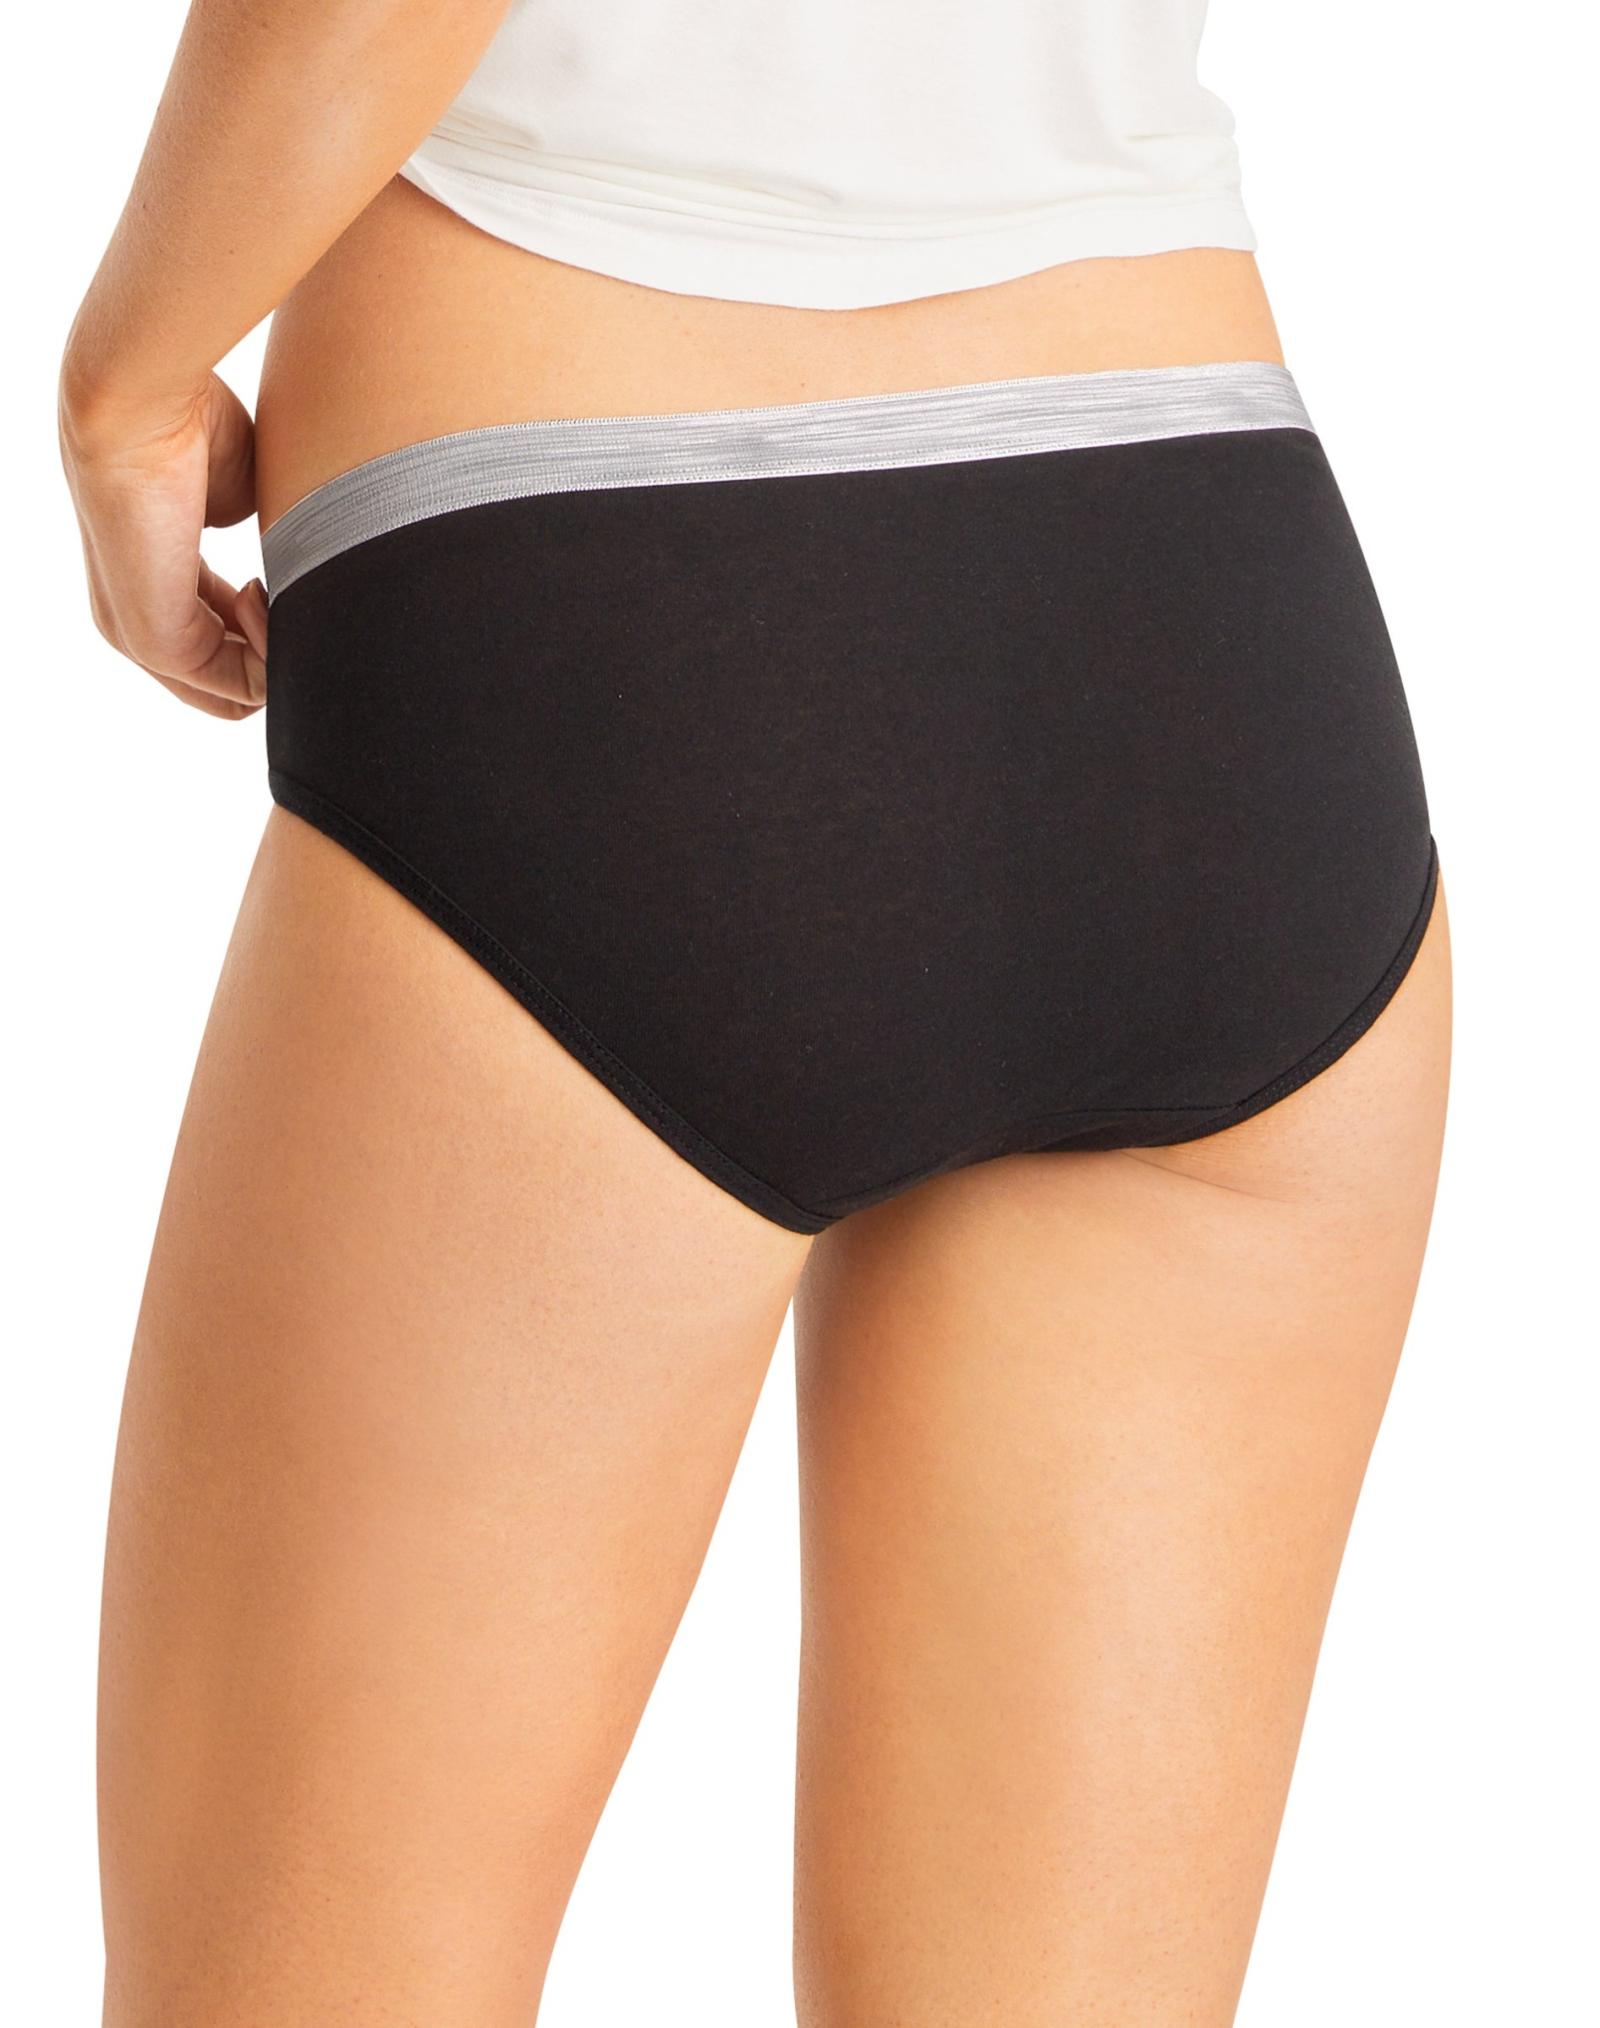 Hanes Women's Cool Comfort Cotton Sporty Hipster Panties, 6 PK